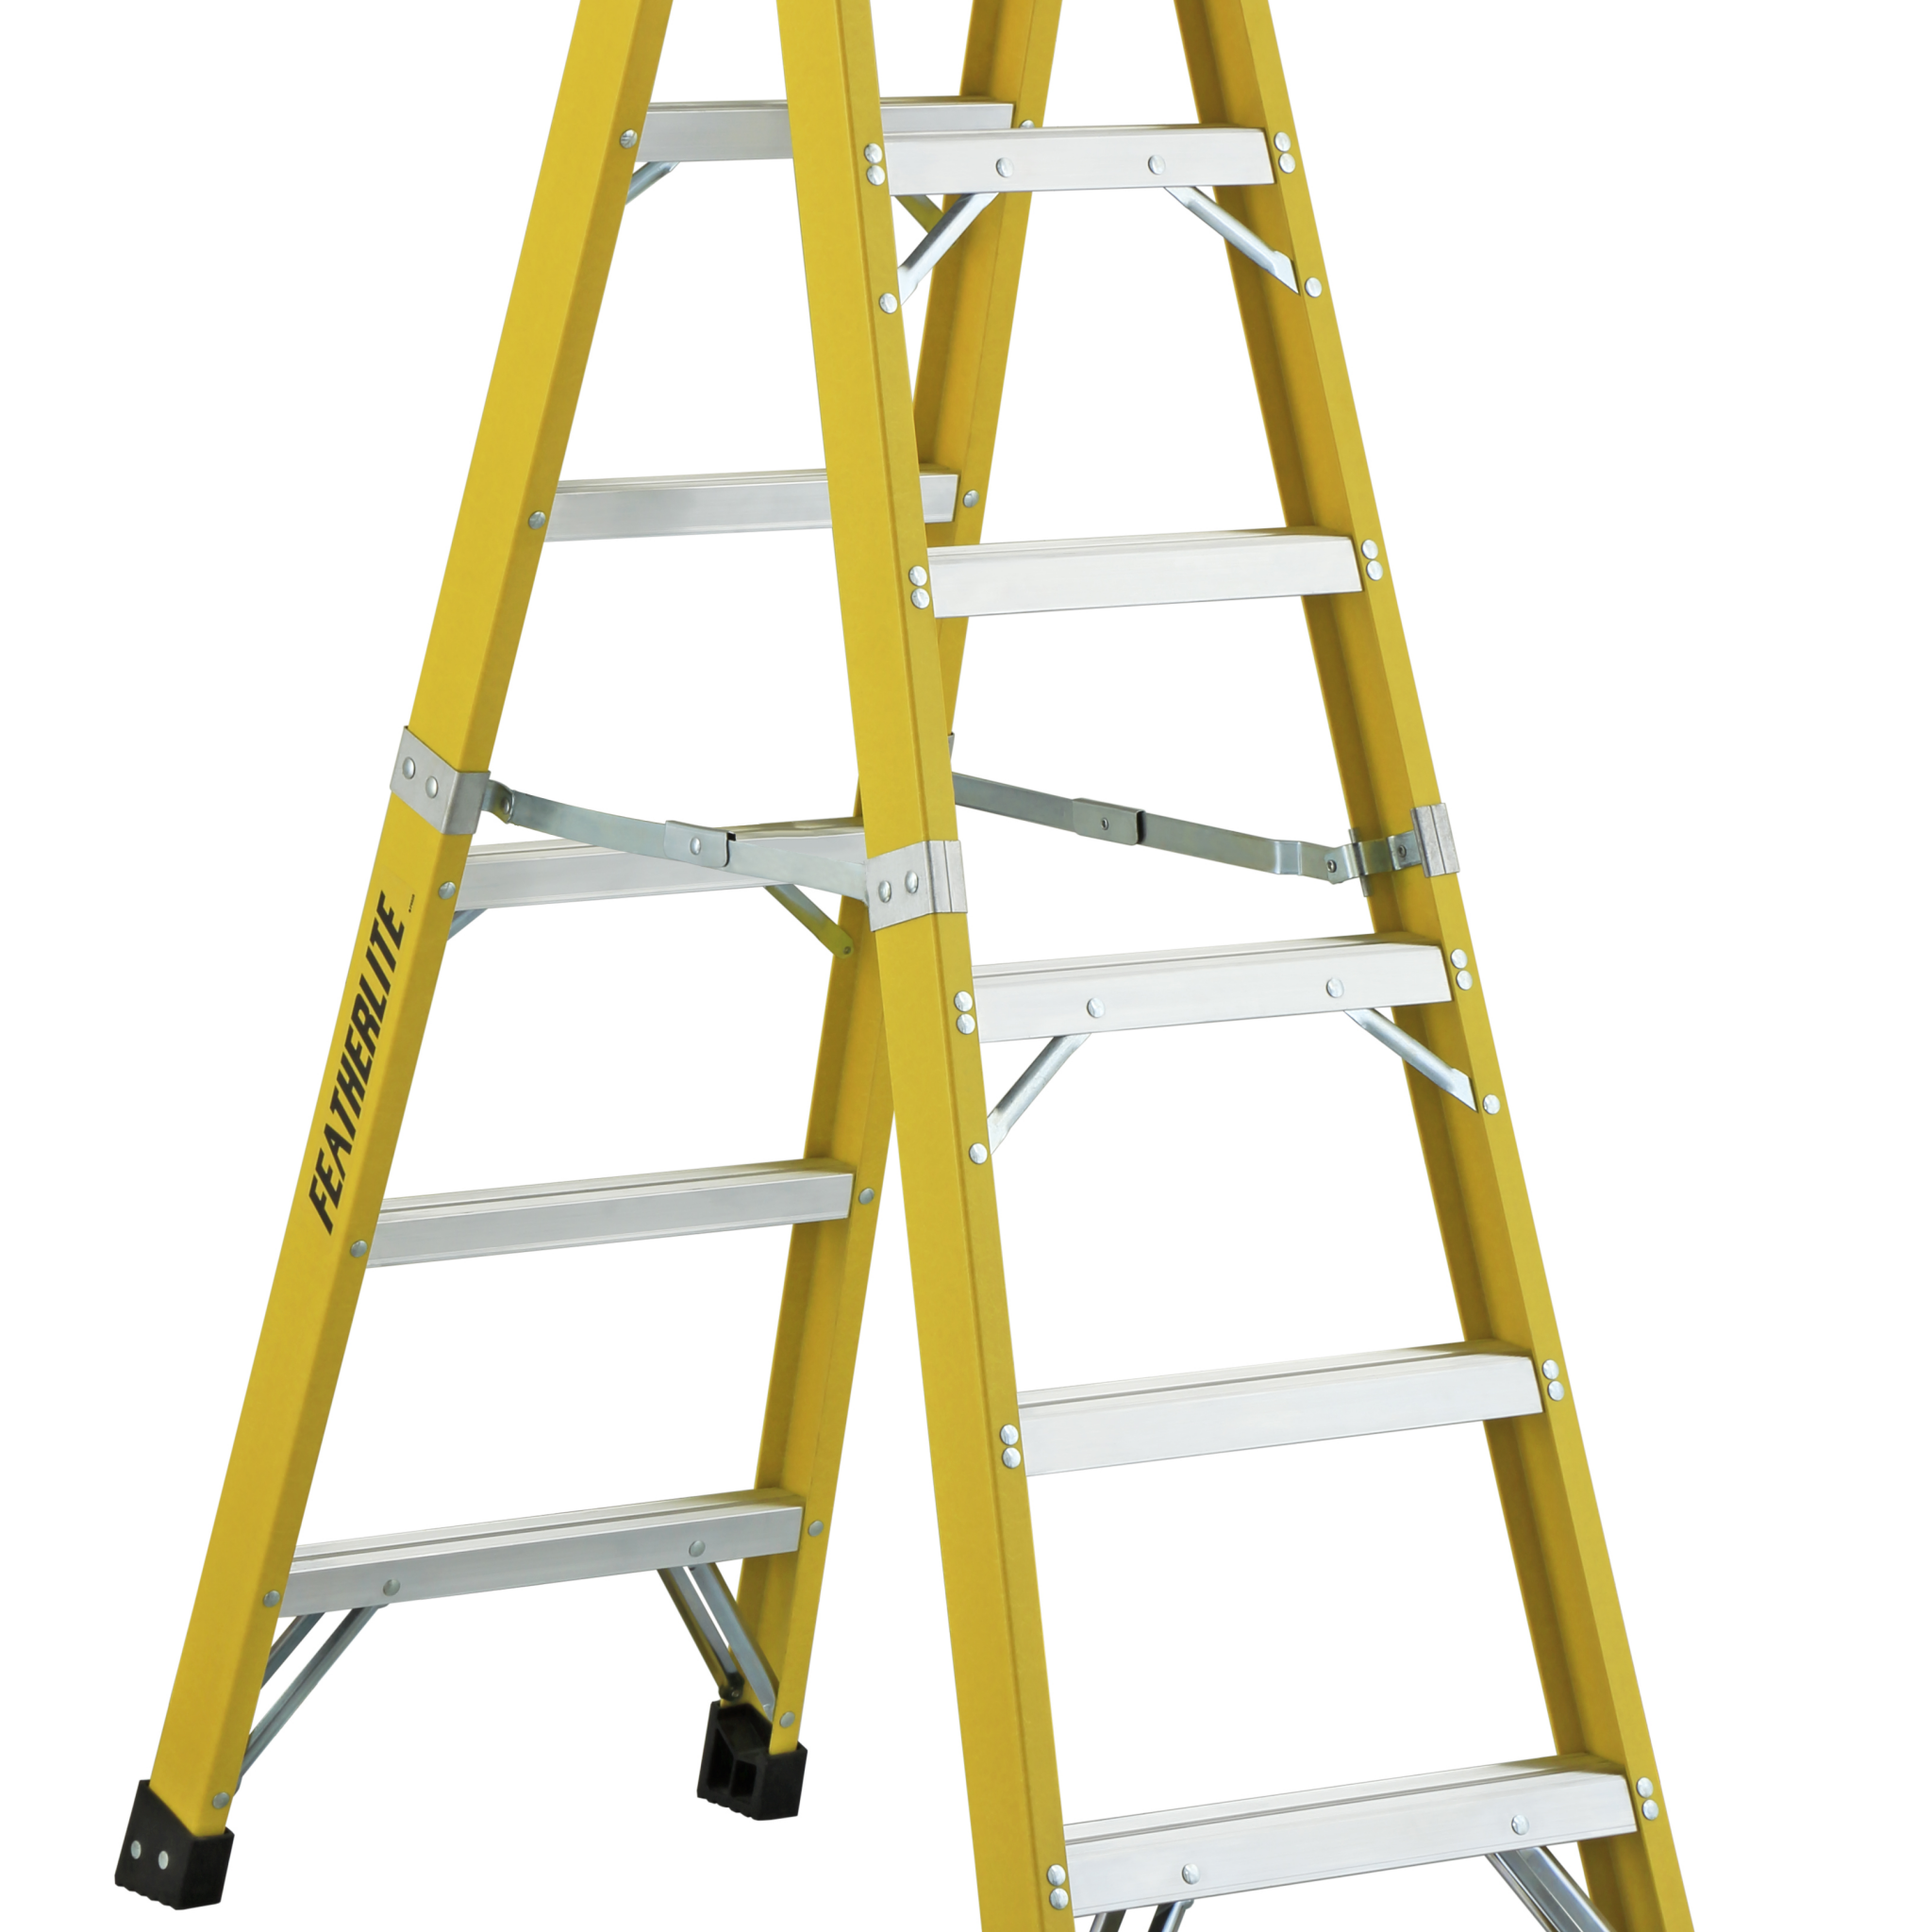 6' Extra Heavy Duty 2 Way Step Ladder #6606